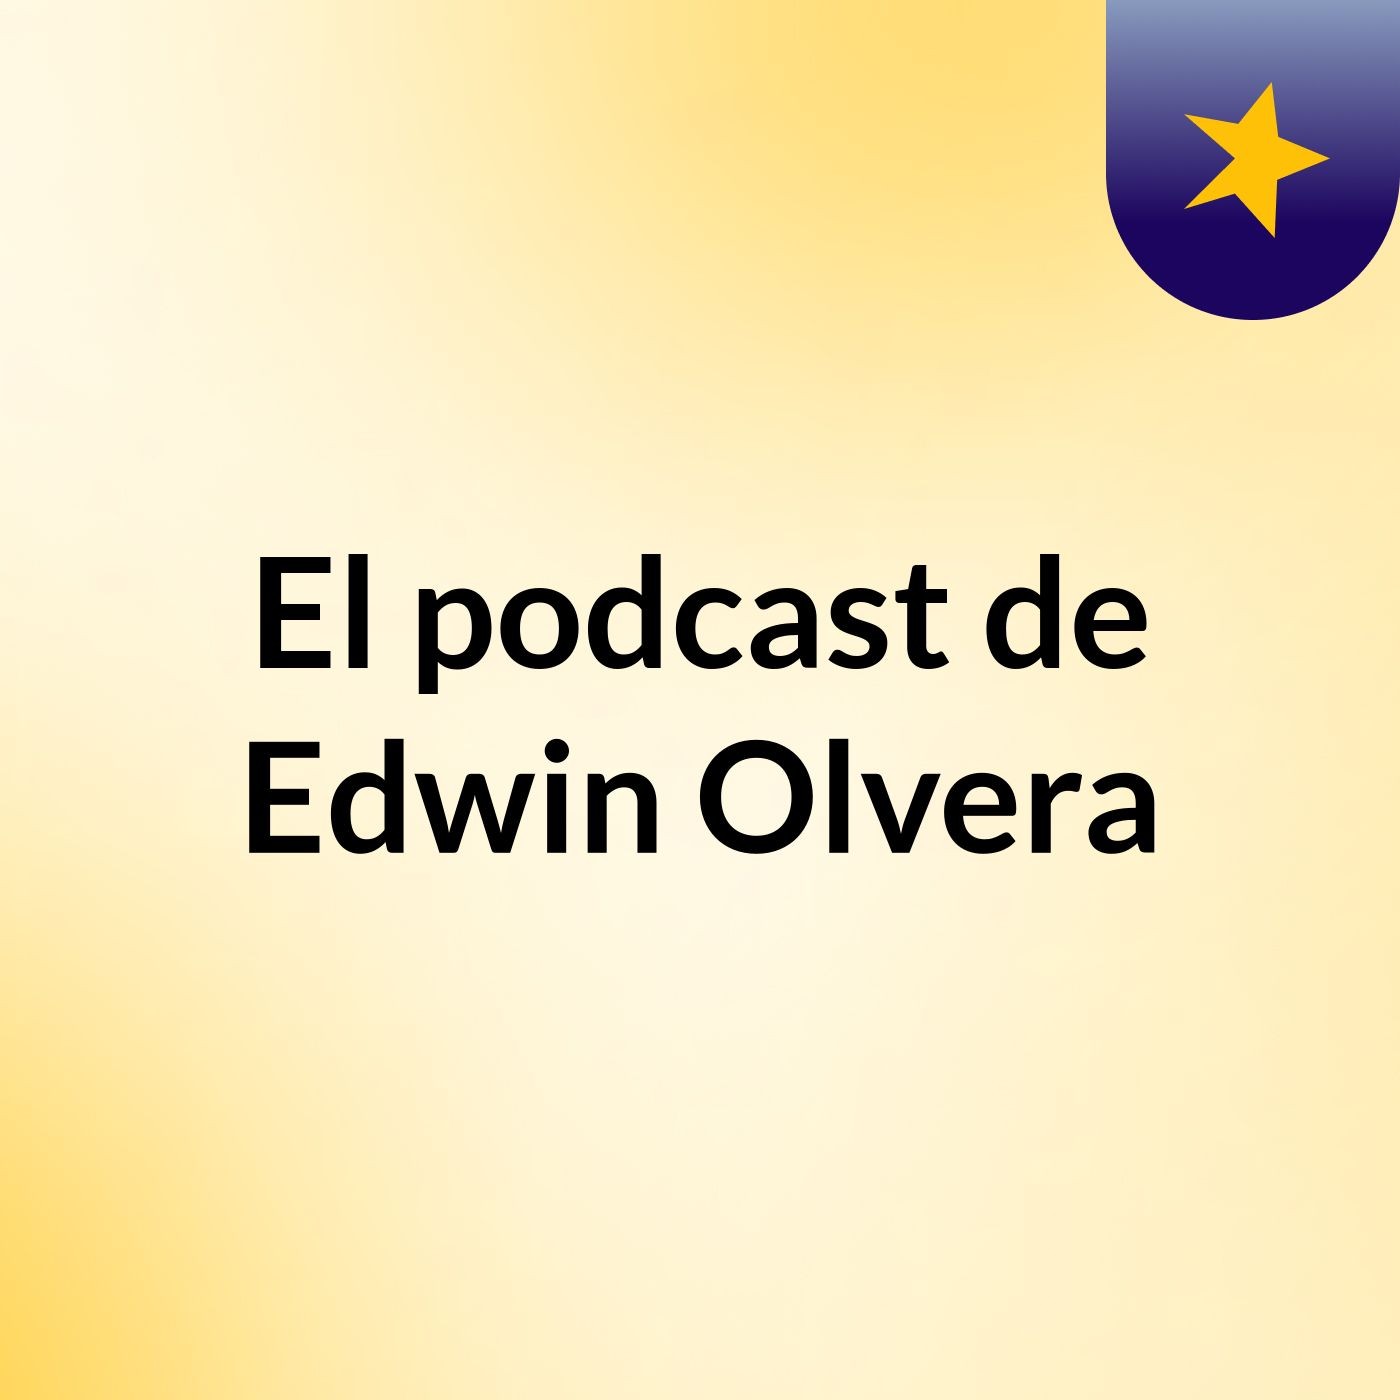 El podcast de Edwin Olvera